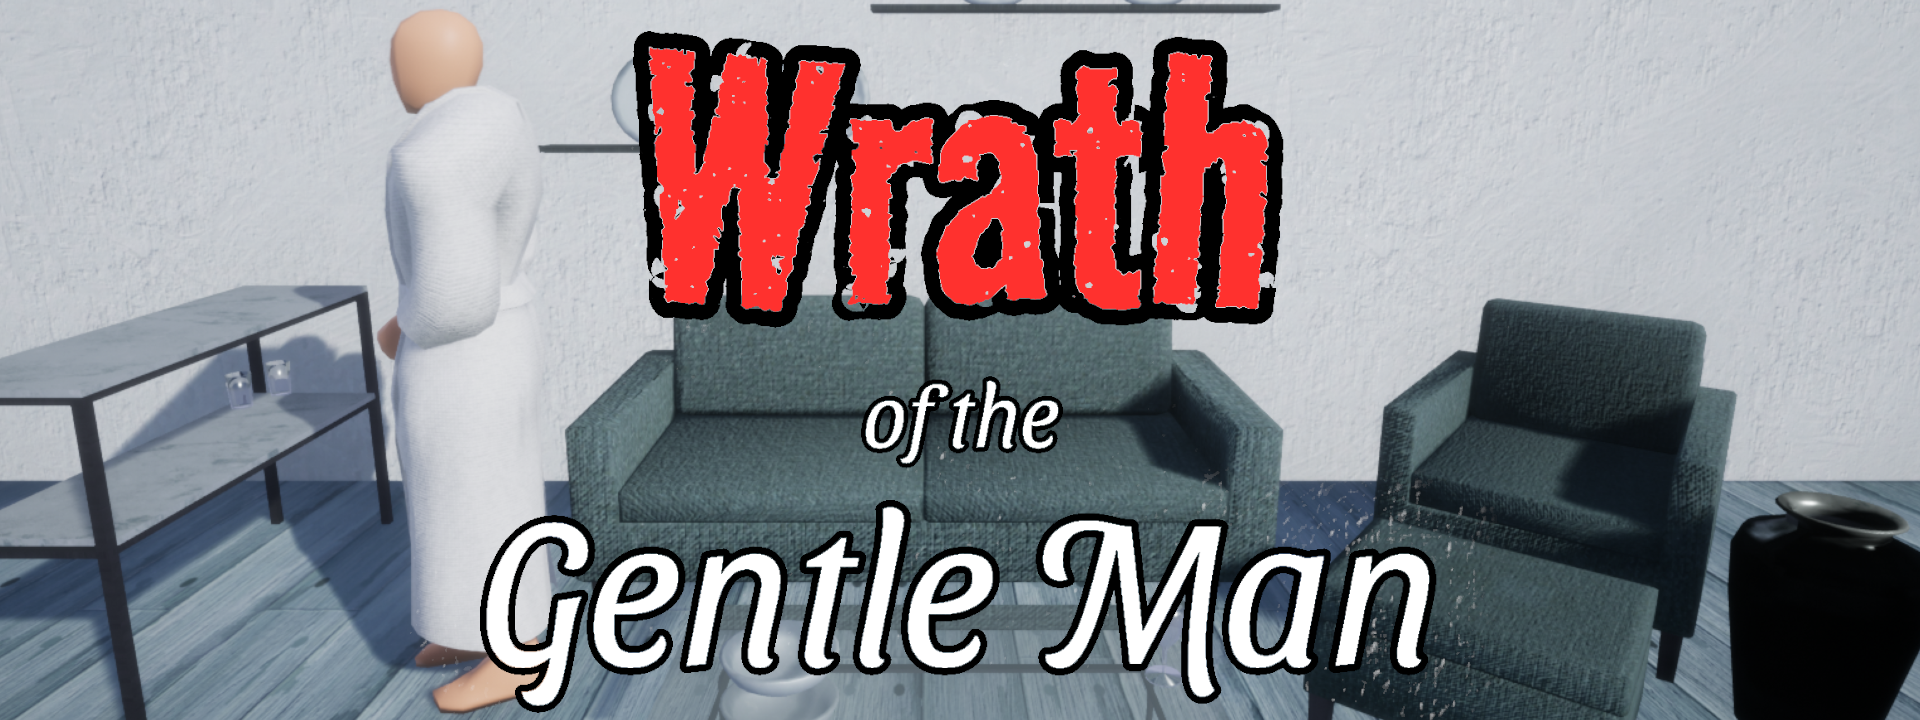 Wrath of the Gentle Man